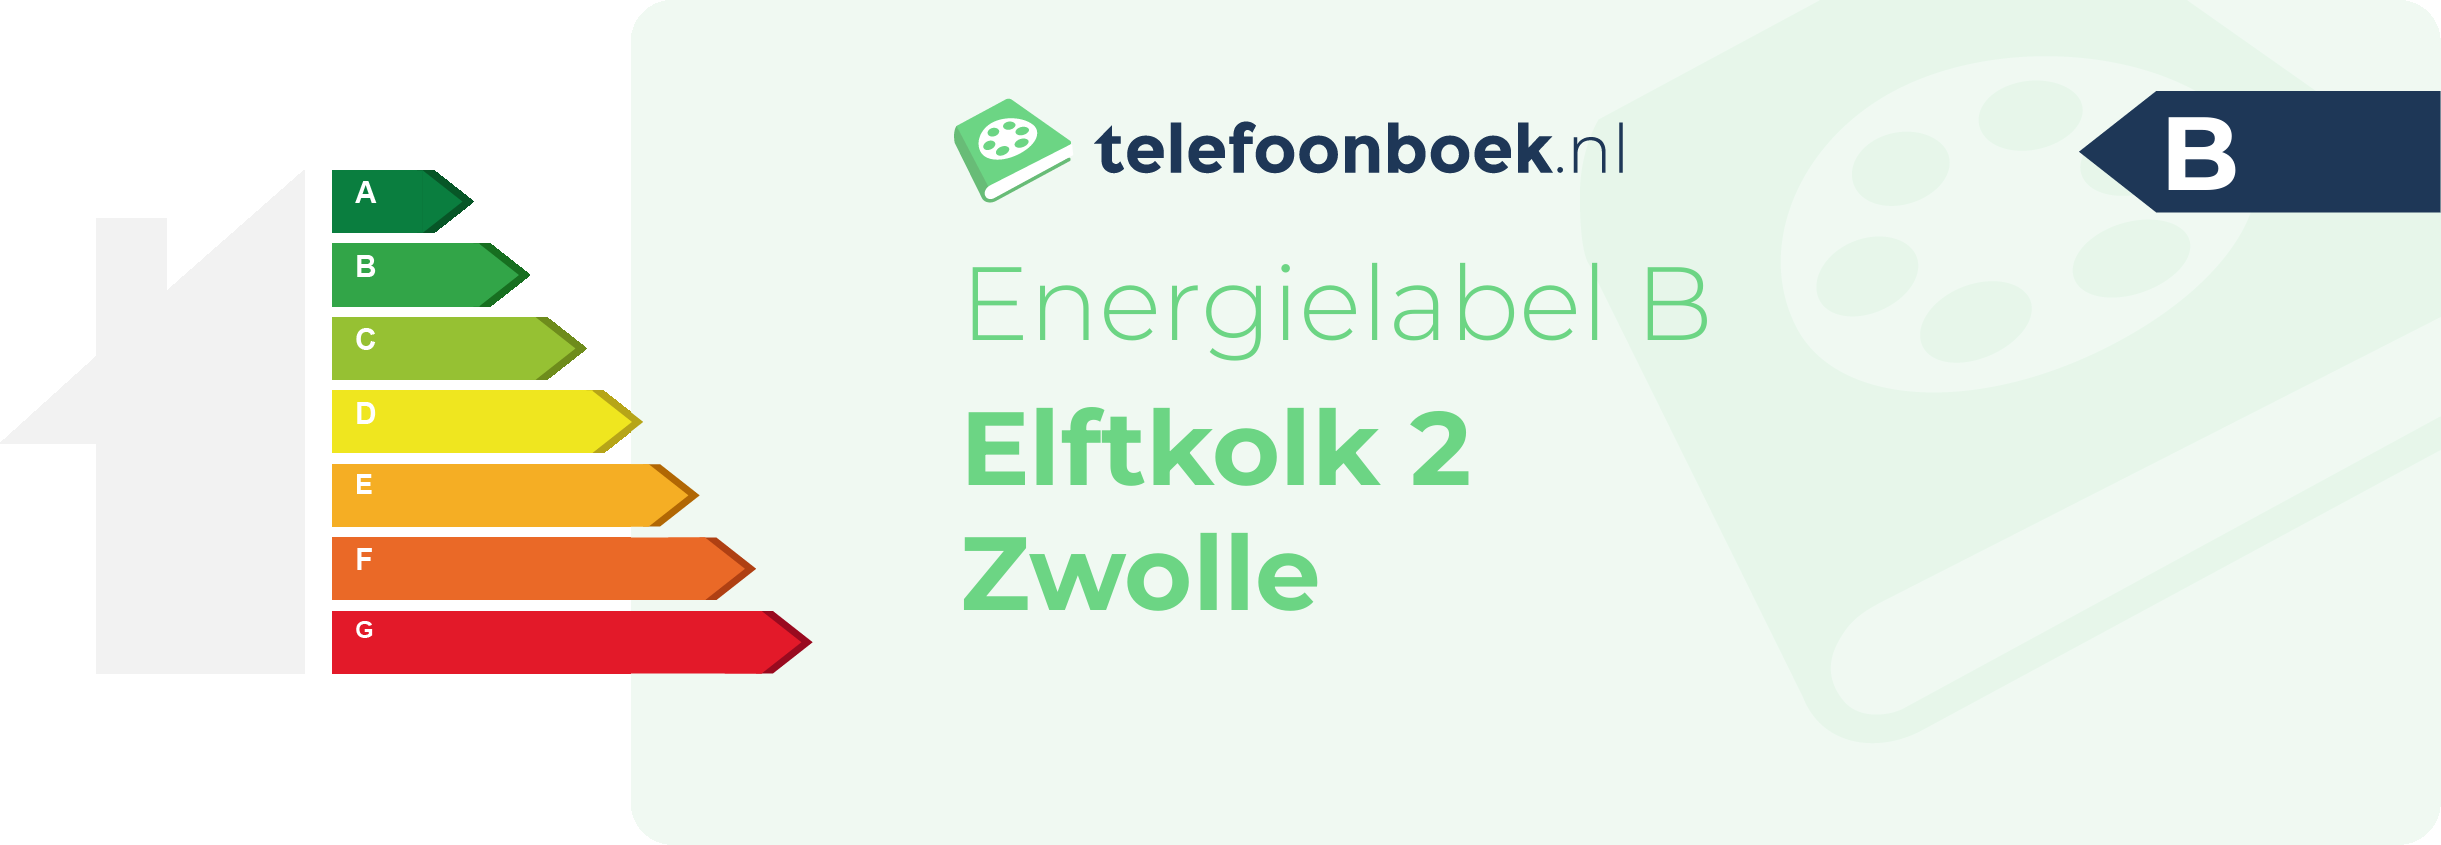 Energielabel Elftkolk 2 Zwolle